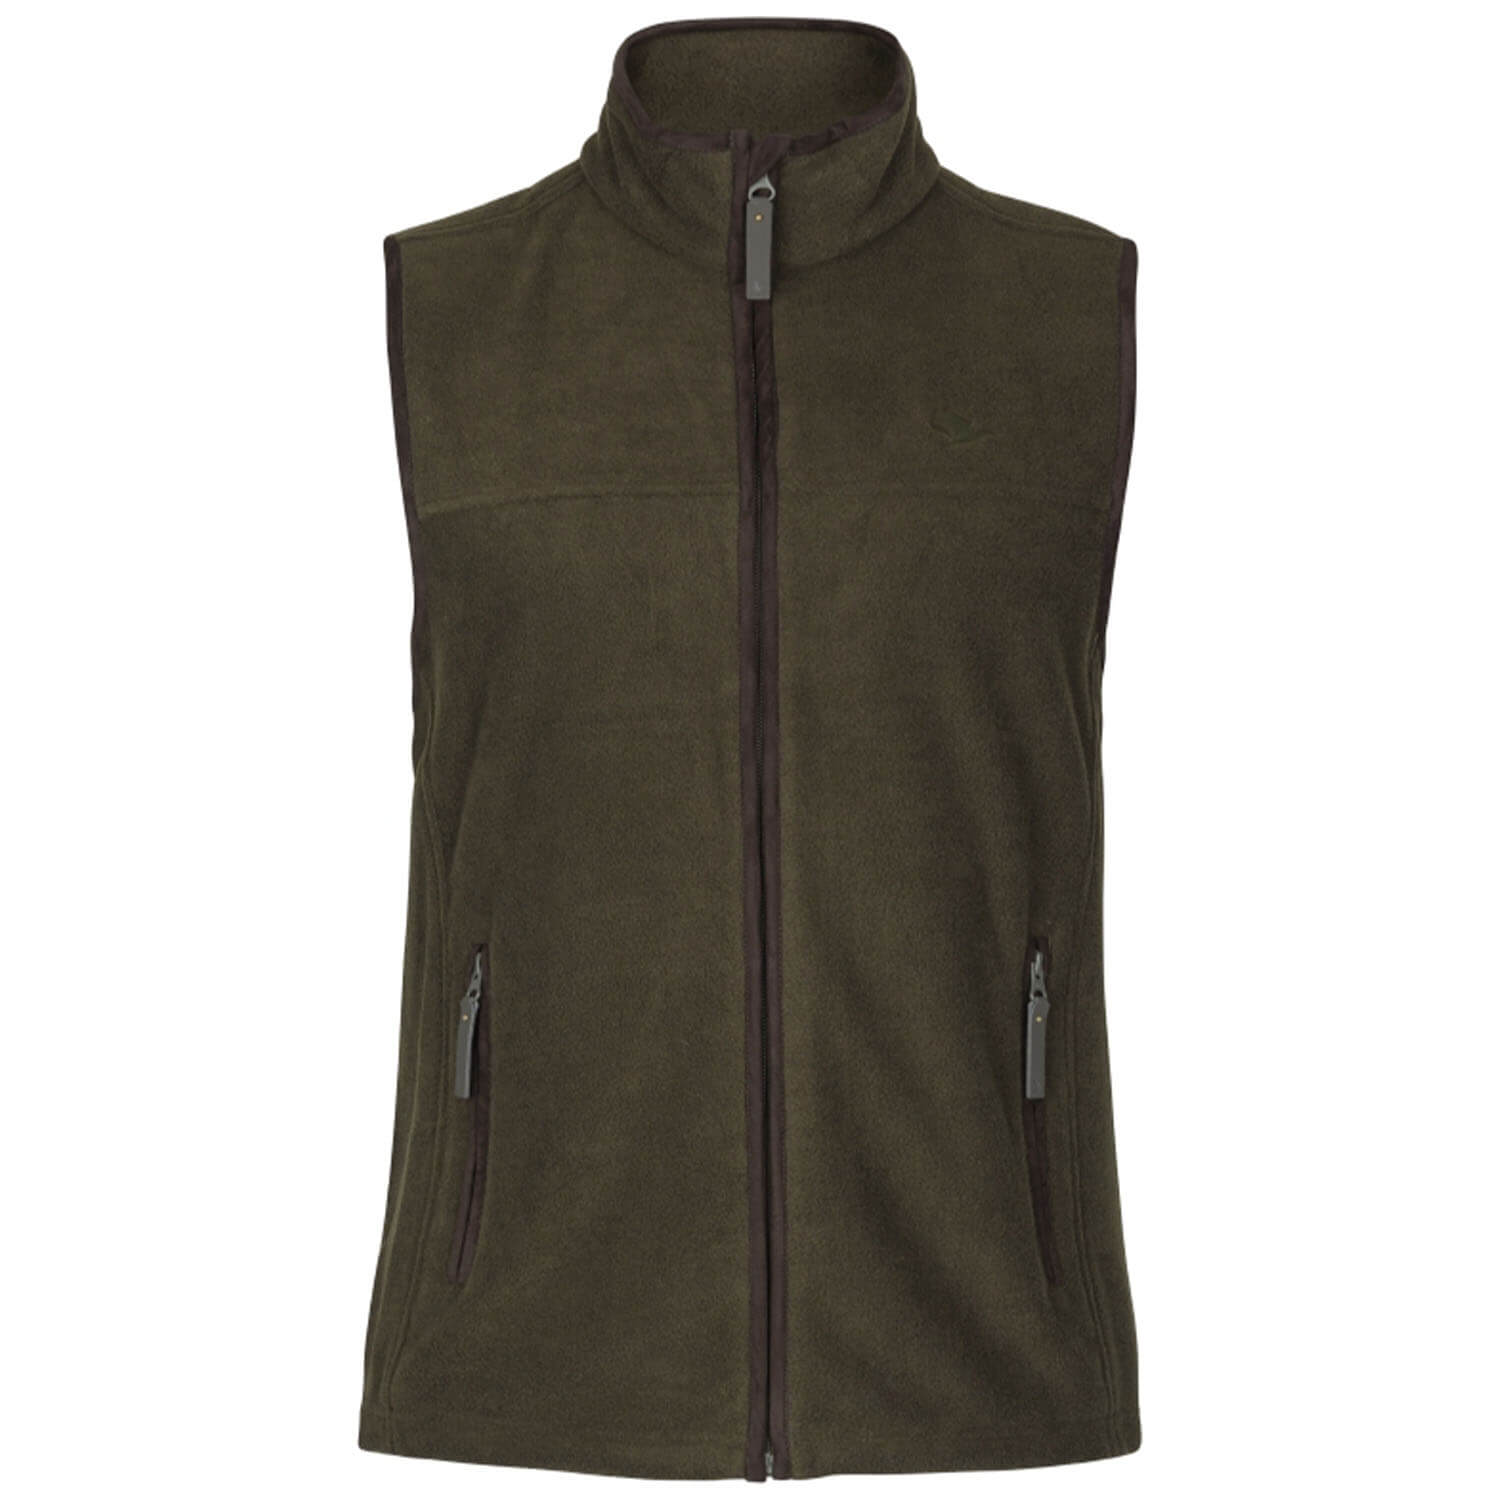  Seeland Woodcock Earl fleece vest (Pine Green Melange) - Jachtvesten